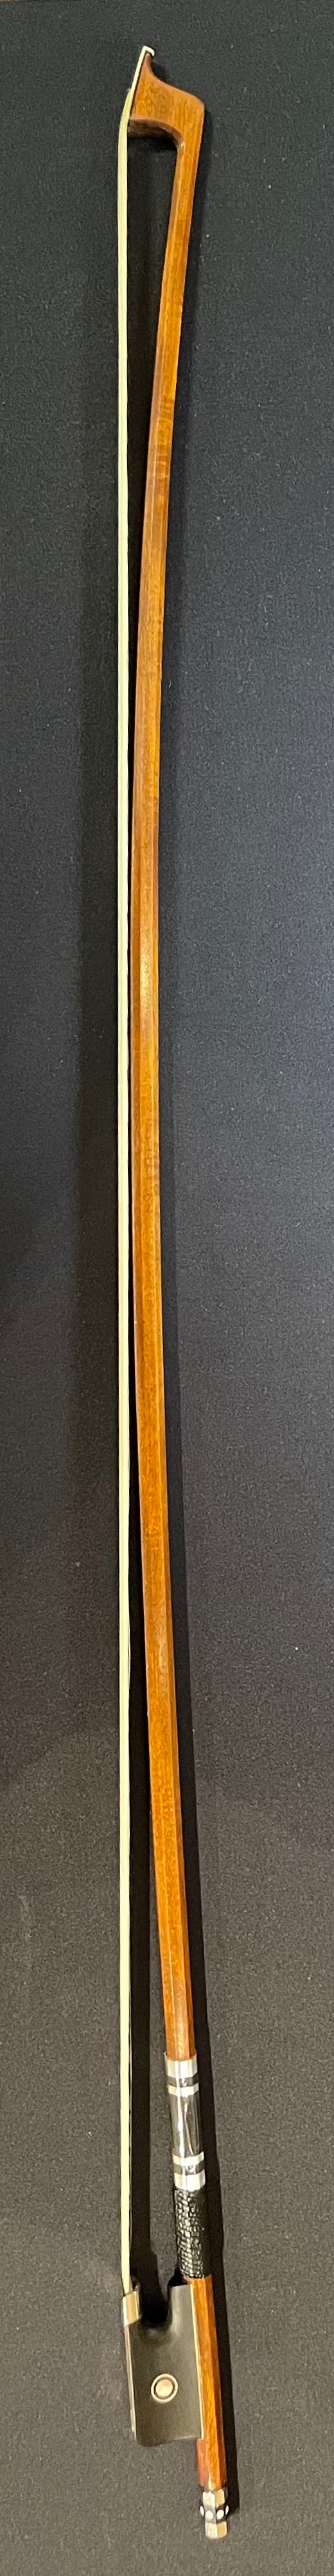 Full Size Viola Bow - TZXS Wood Model